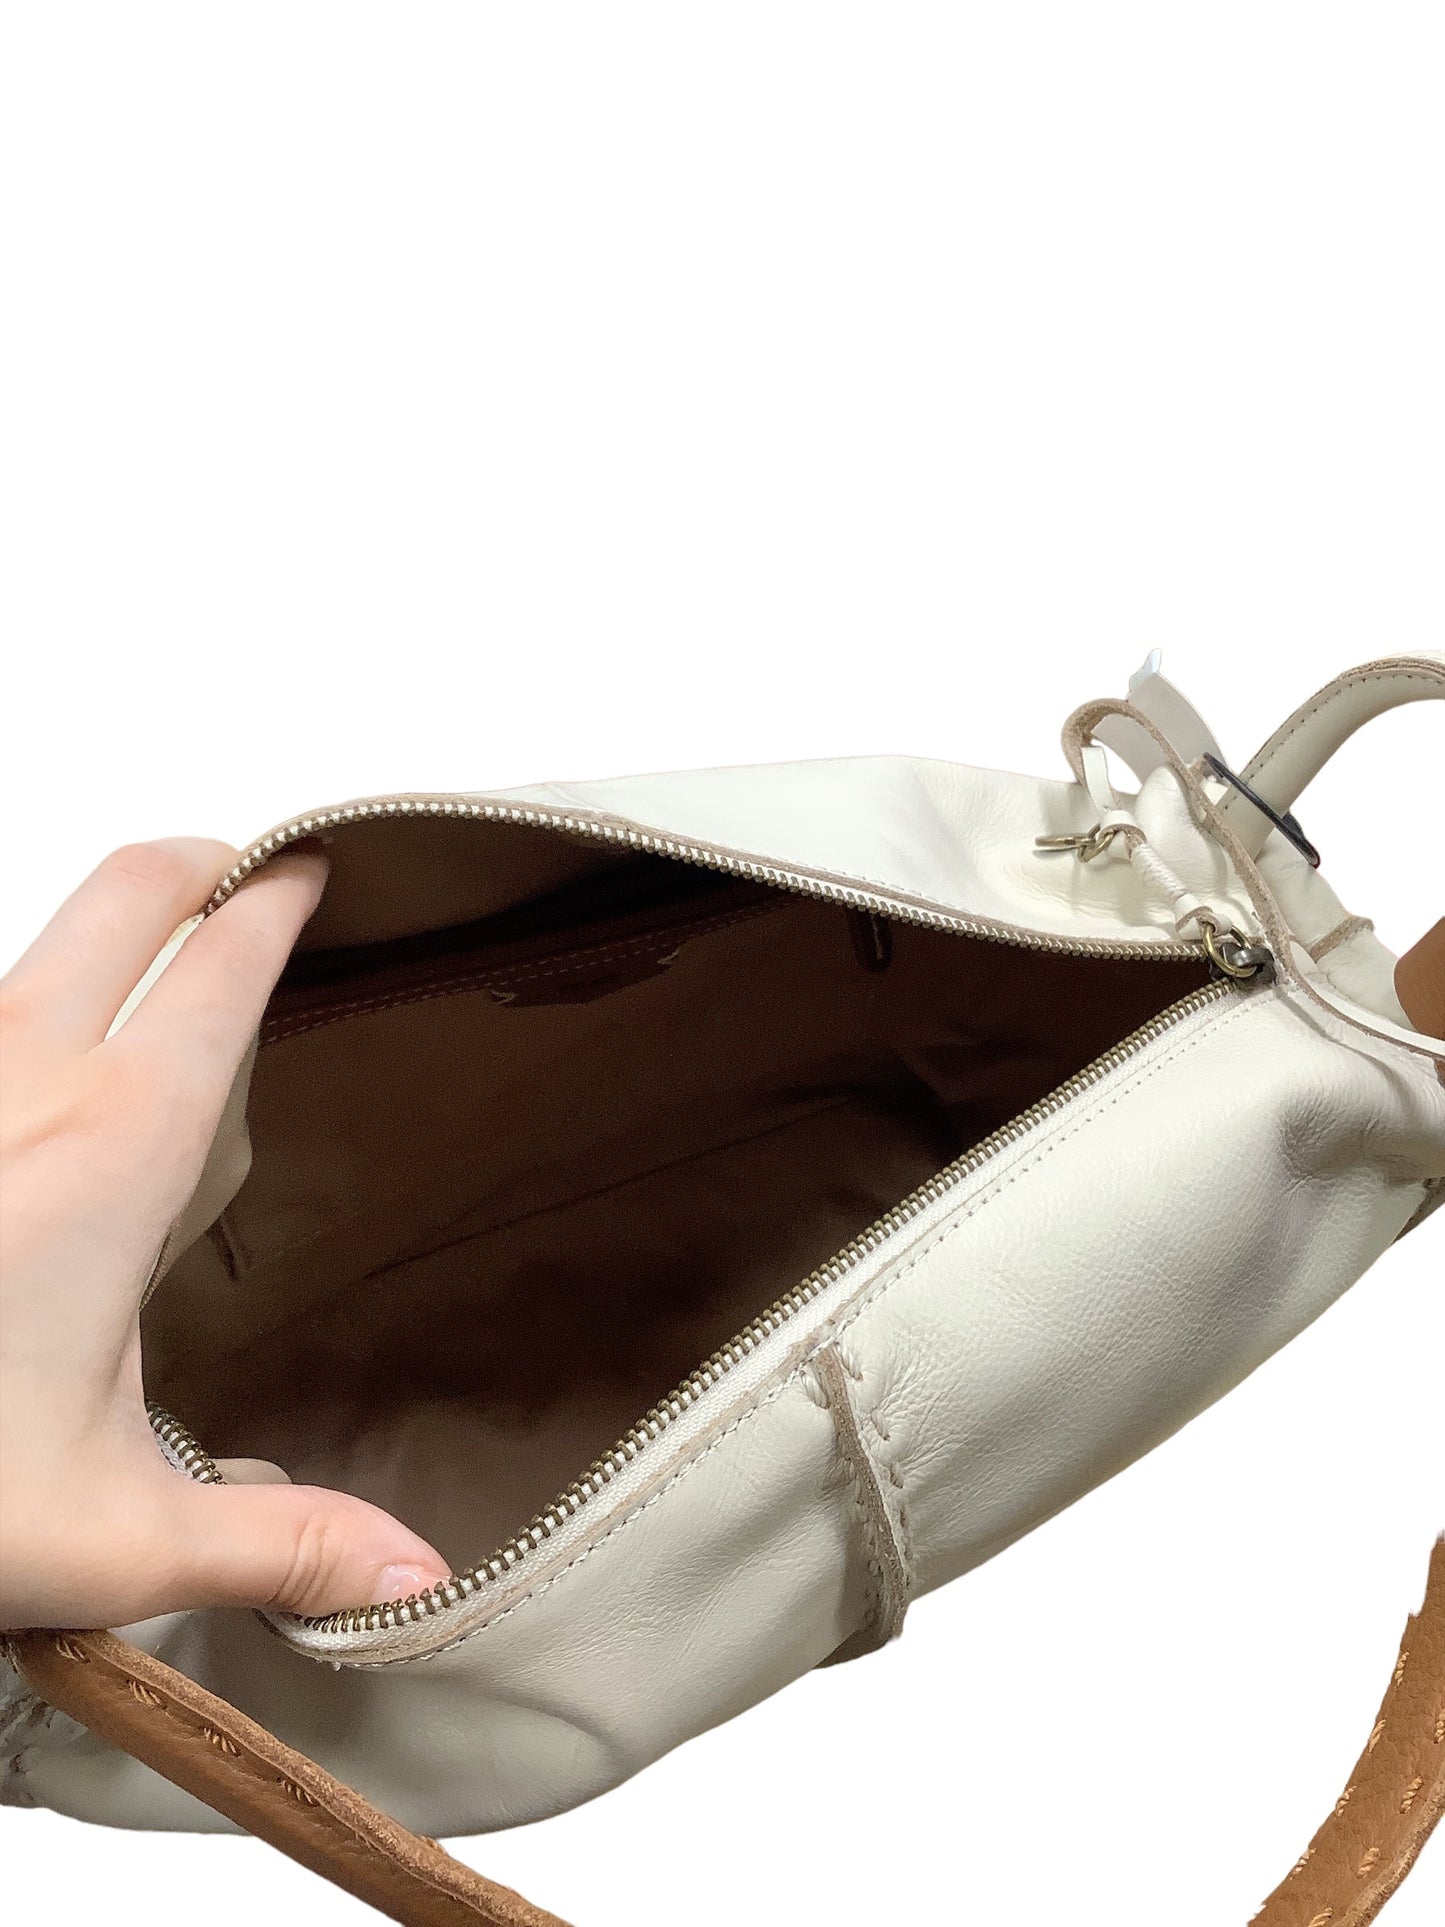 Handbag Leather By The Sak  Size: Medium